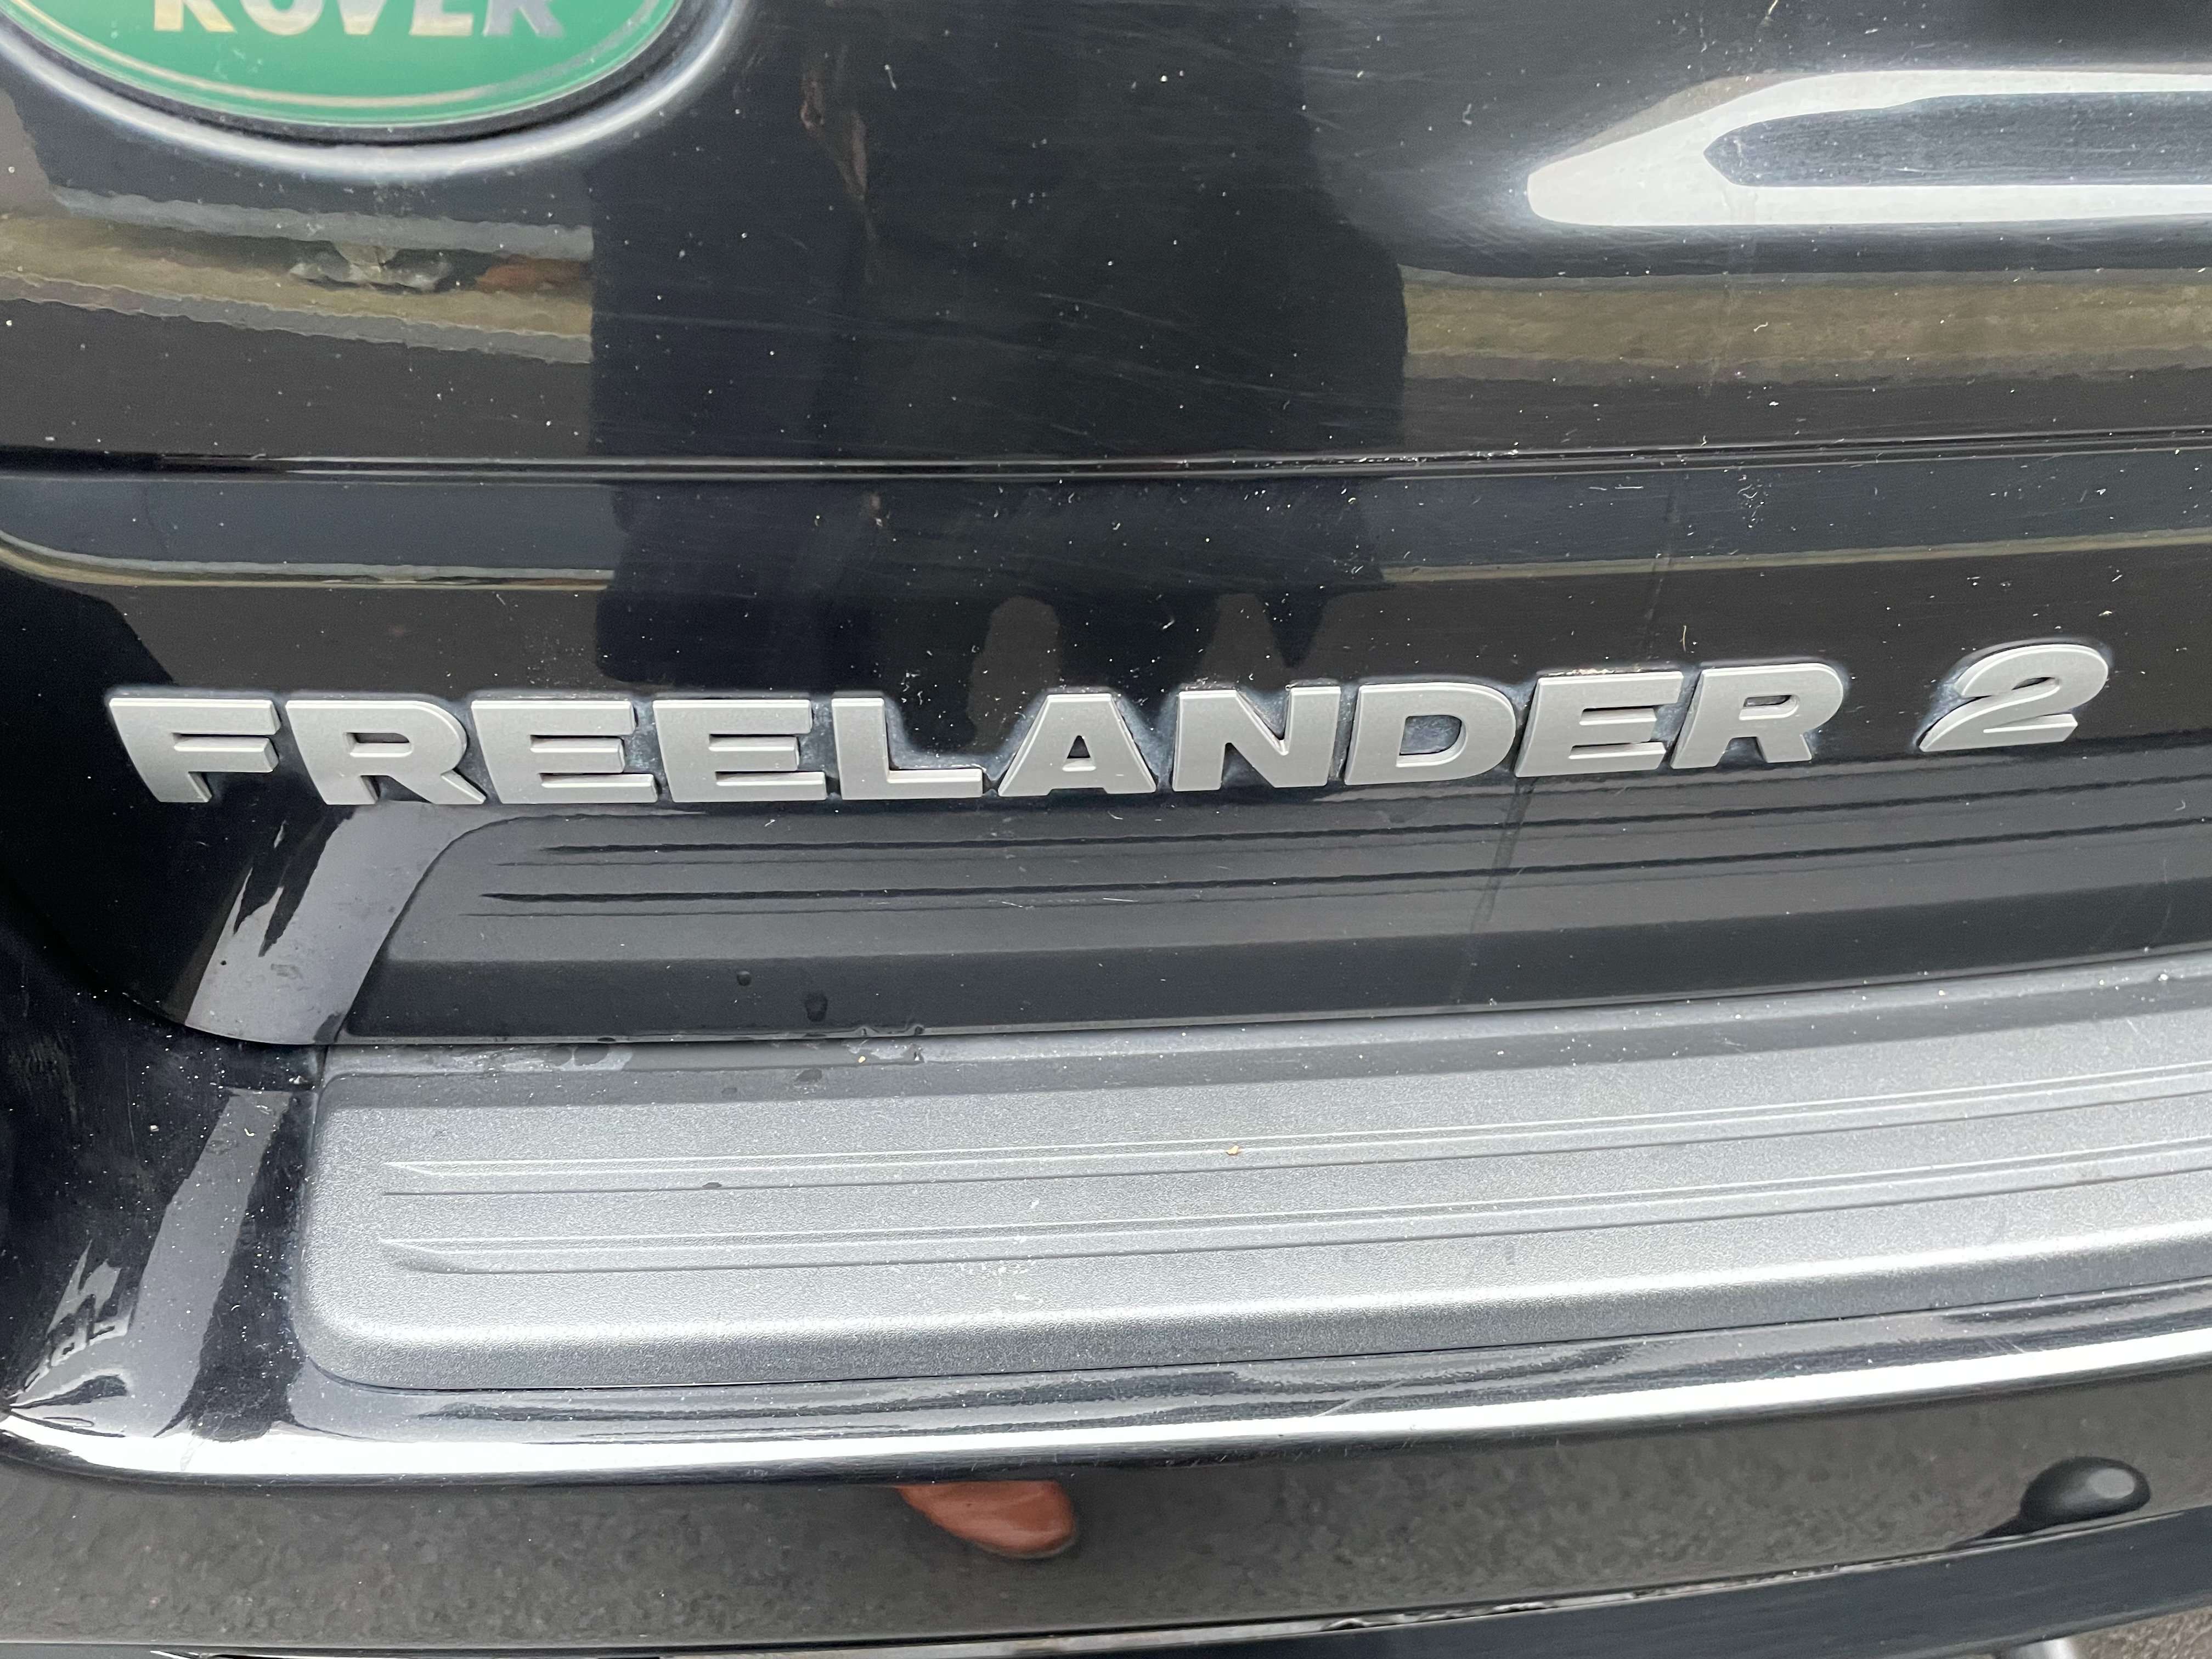 Ninove auto - Land Rover Freelander